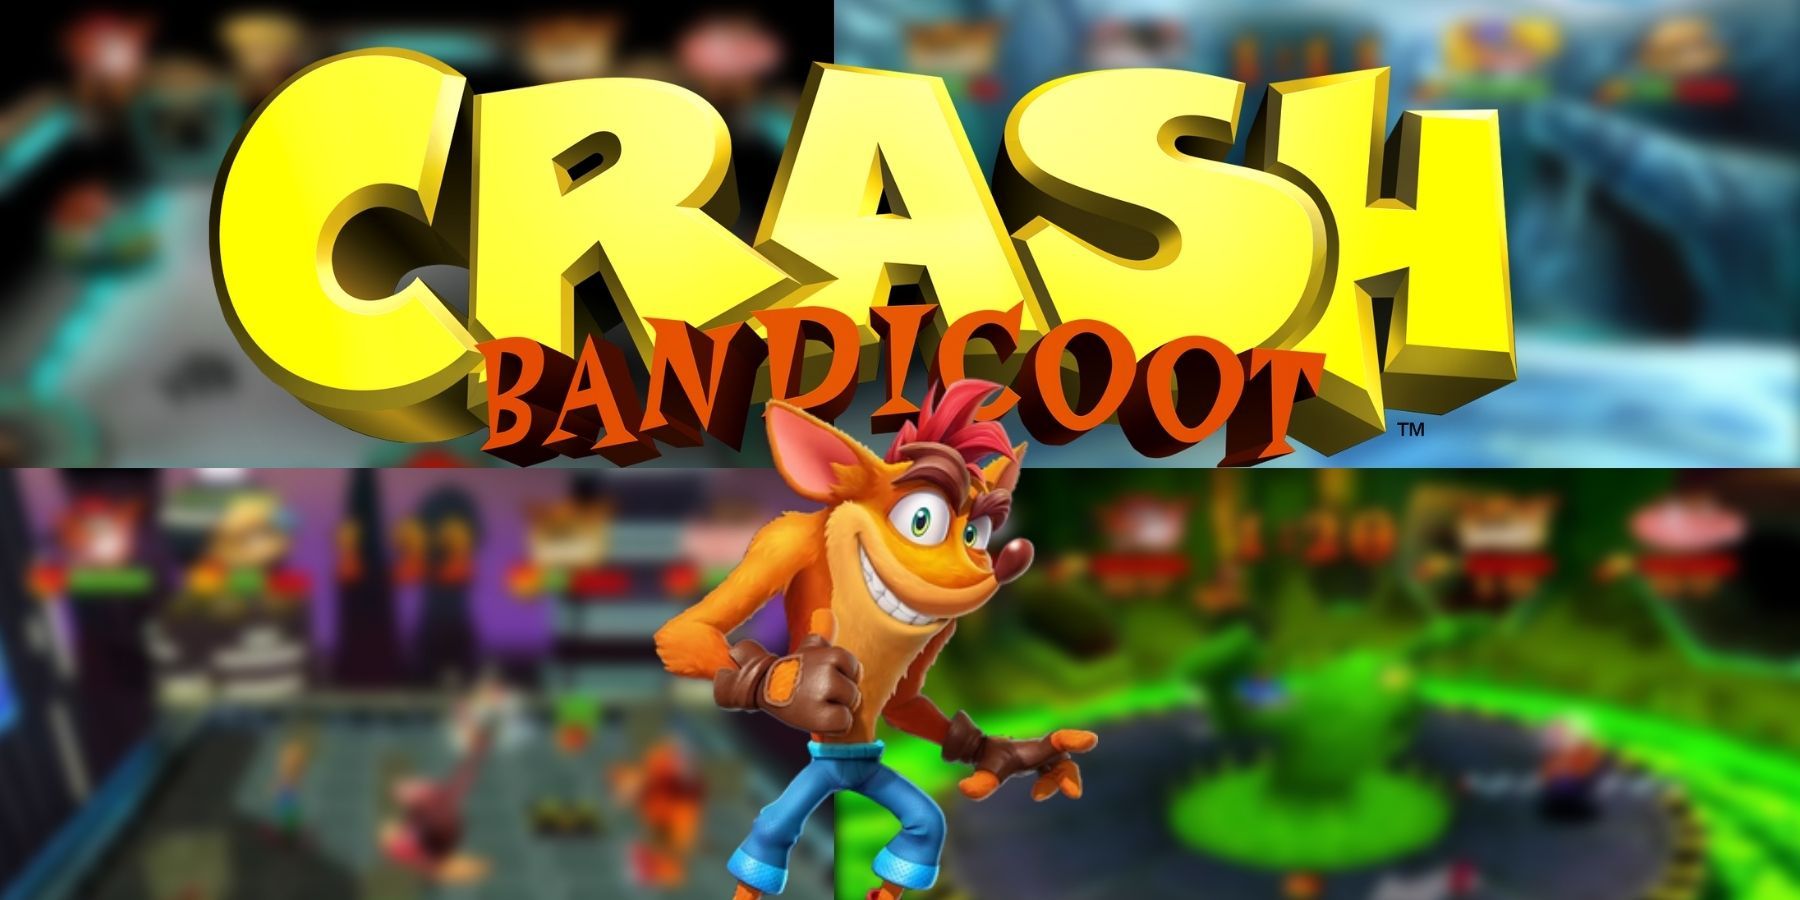 Rullesten Mexico teori One Classic Crash Bandicoot Game Still Needs a Remaster